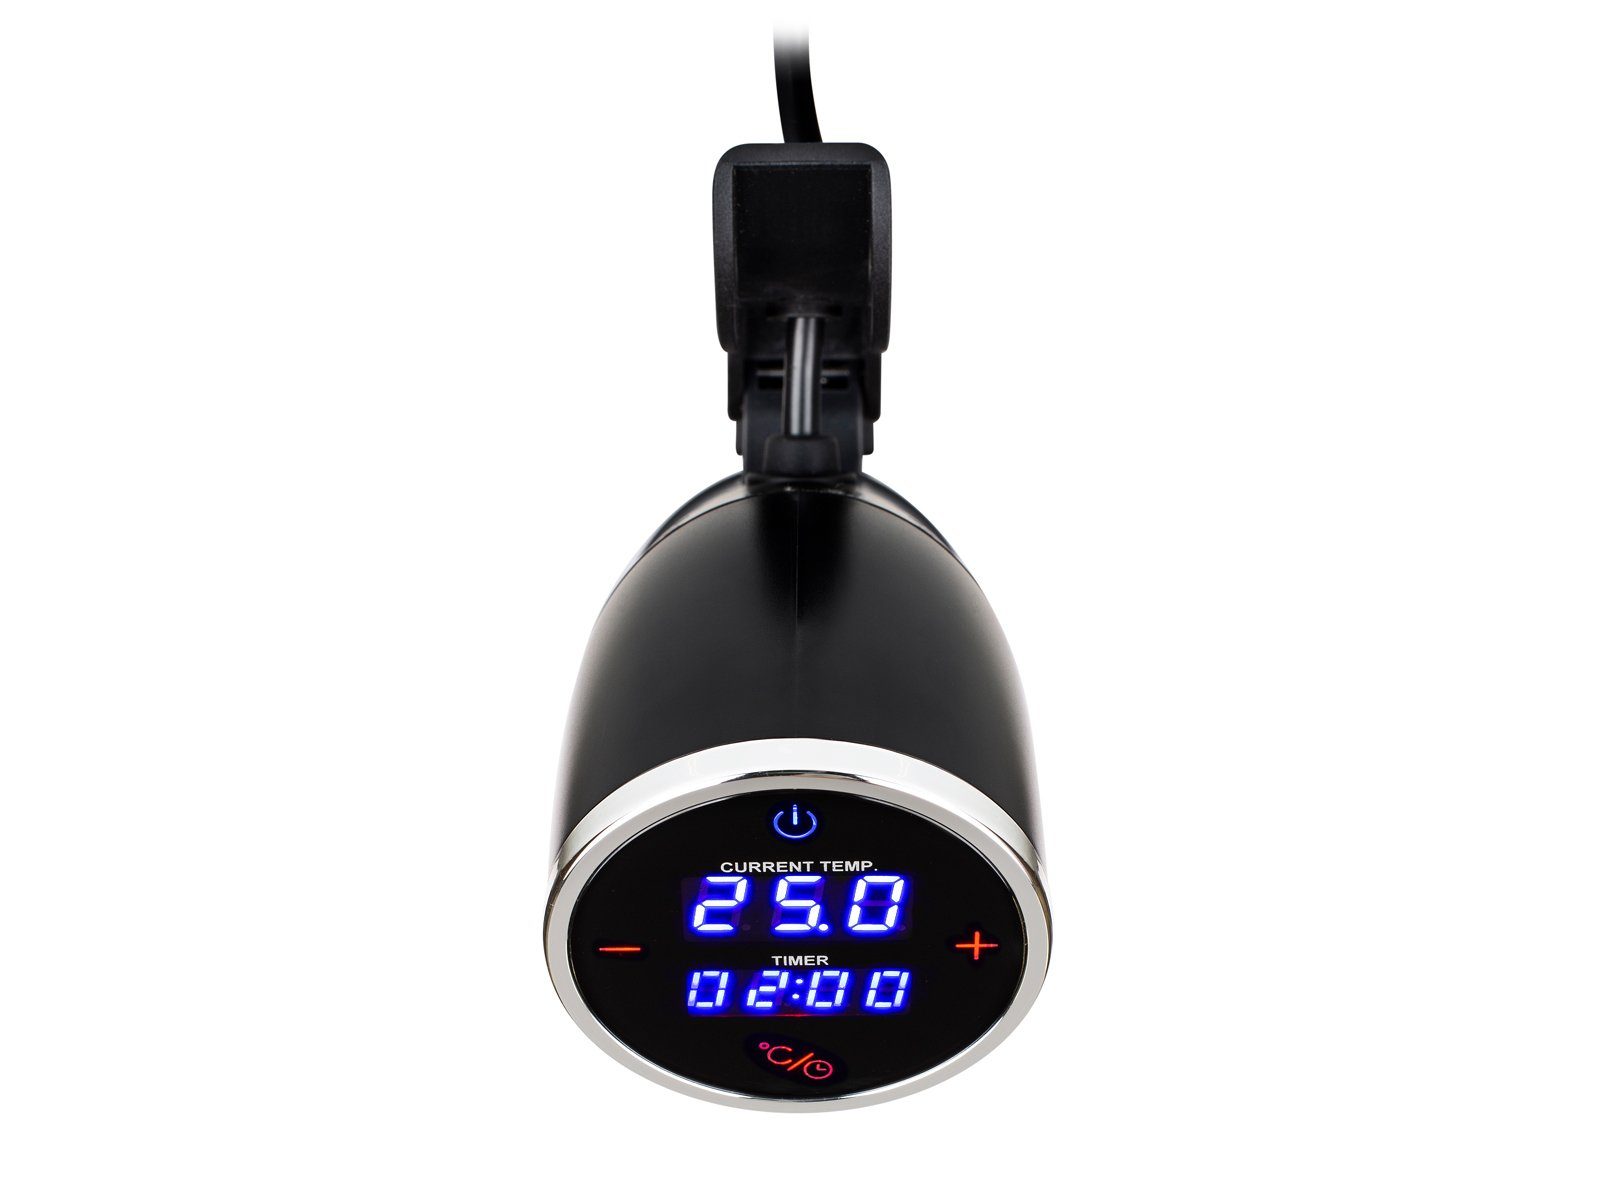 PRINCESS Sous-Vide Stick, Schon-Garer Stab Präzisionskocher Display Thermostat LED Souvid Touch